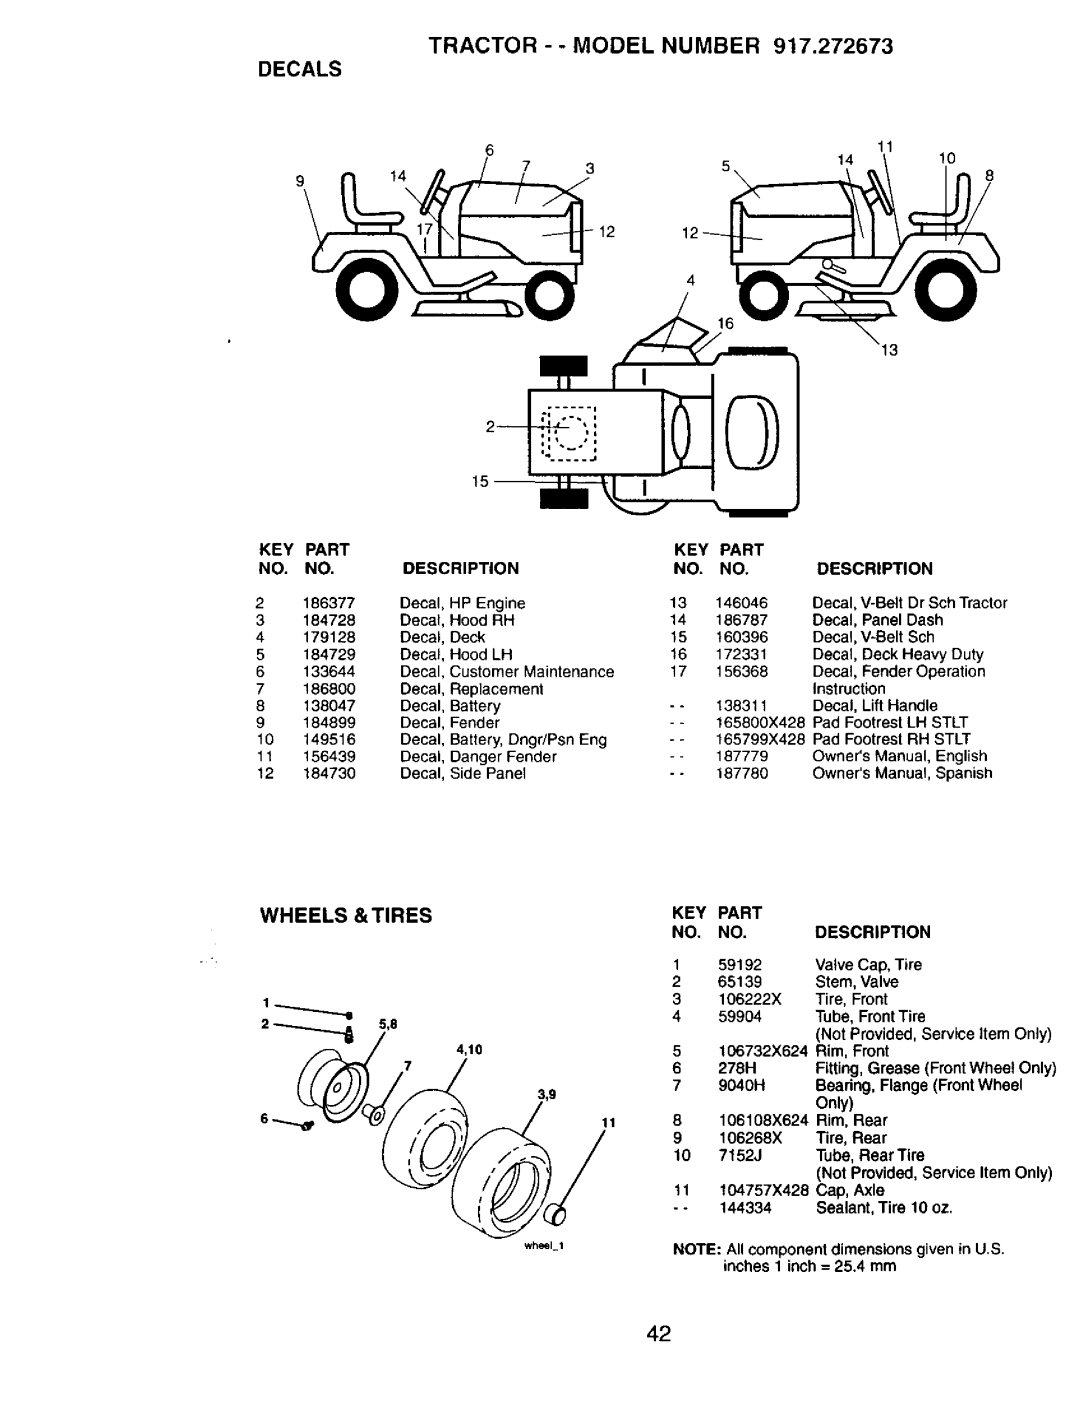 Craftsman 917272673 owner manual Tractor - - Model Number Decals, Wheels &Tires, Part, Description 